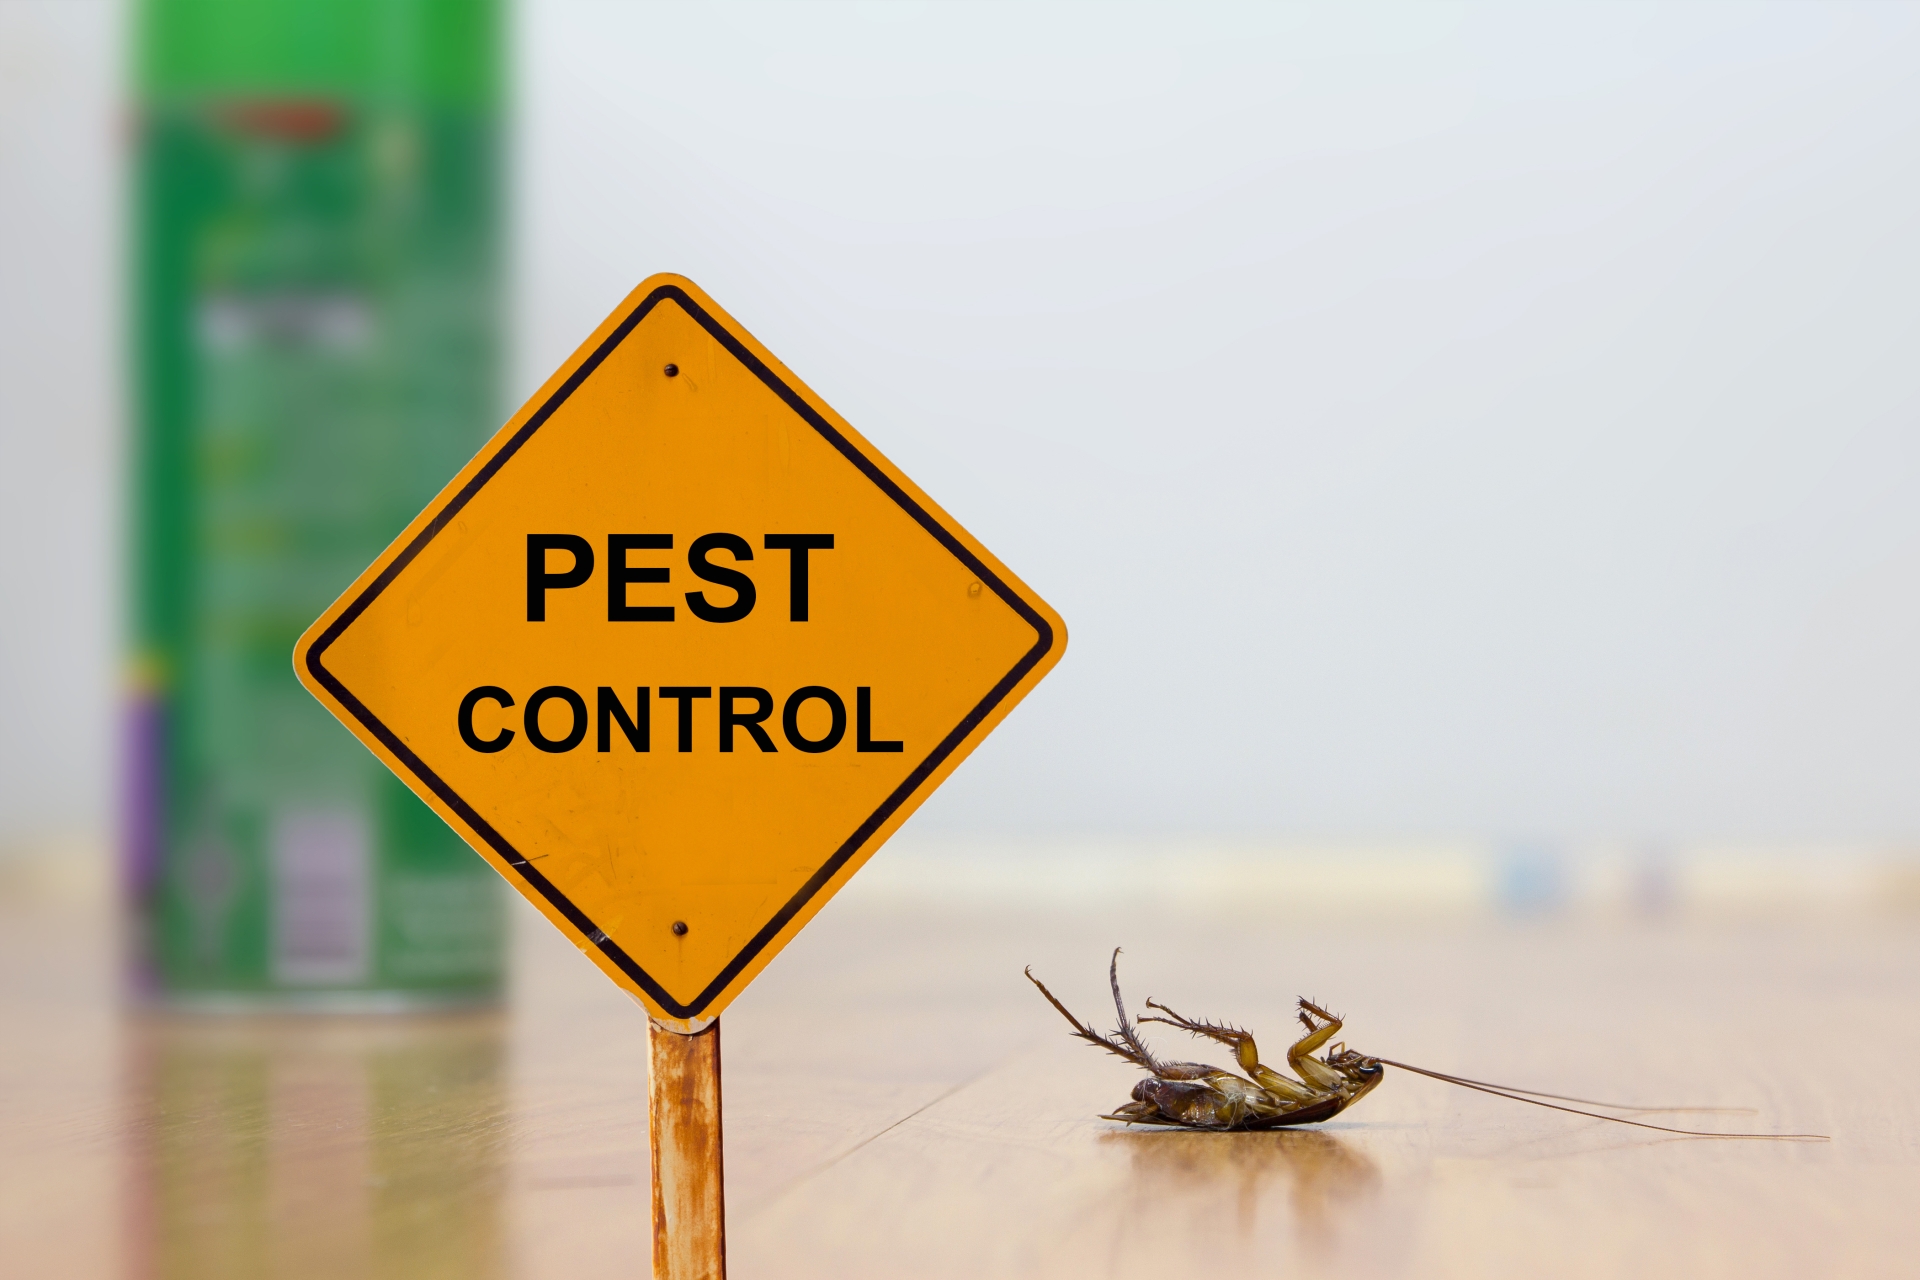 24 Hour Pest Control, Pest Control in Brockley, Crofton Park, Honor Oak Park, SE4. Call Now 020 8166 9746